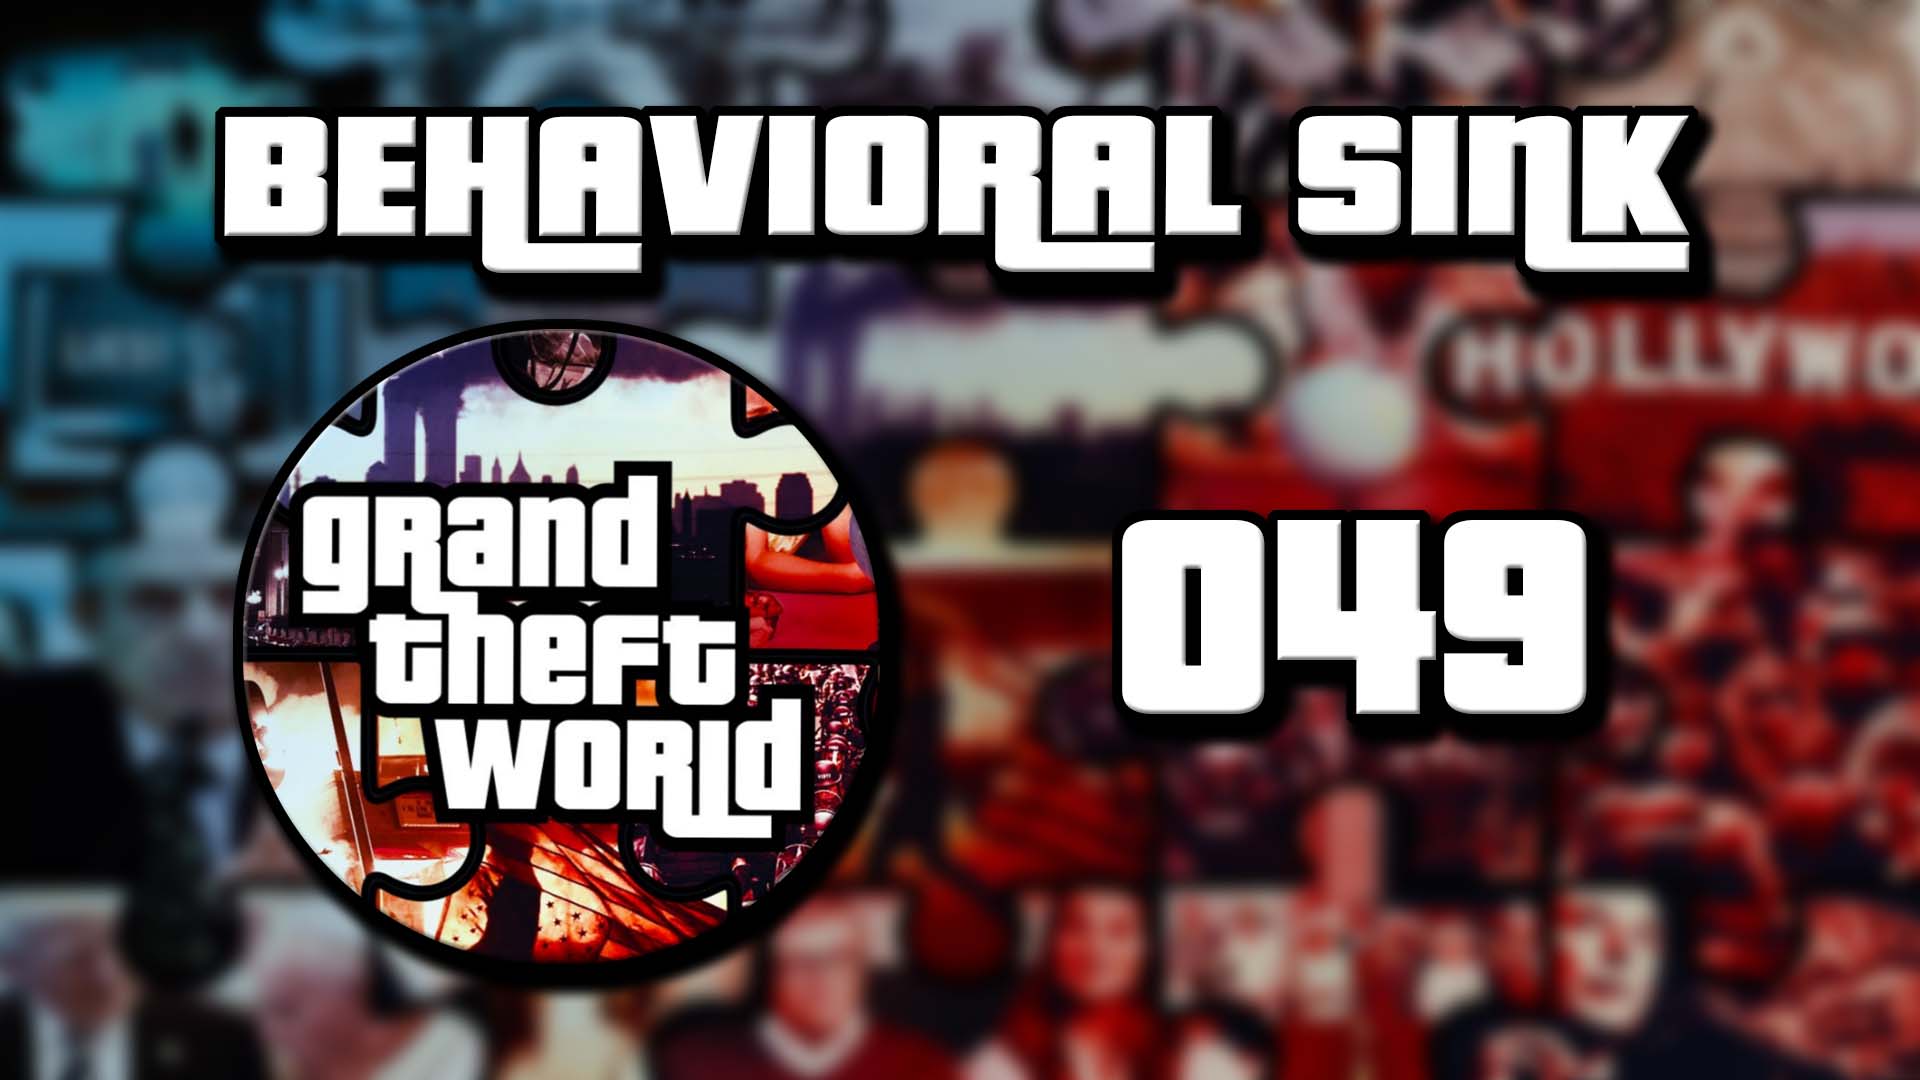 Grand Theft World Podcast 049 | Behavioral Sink